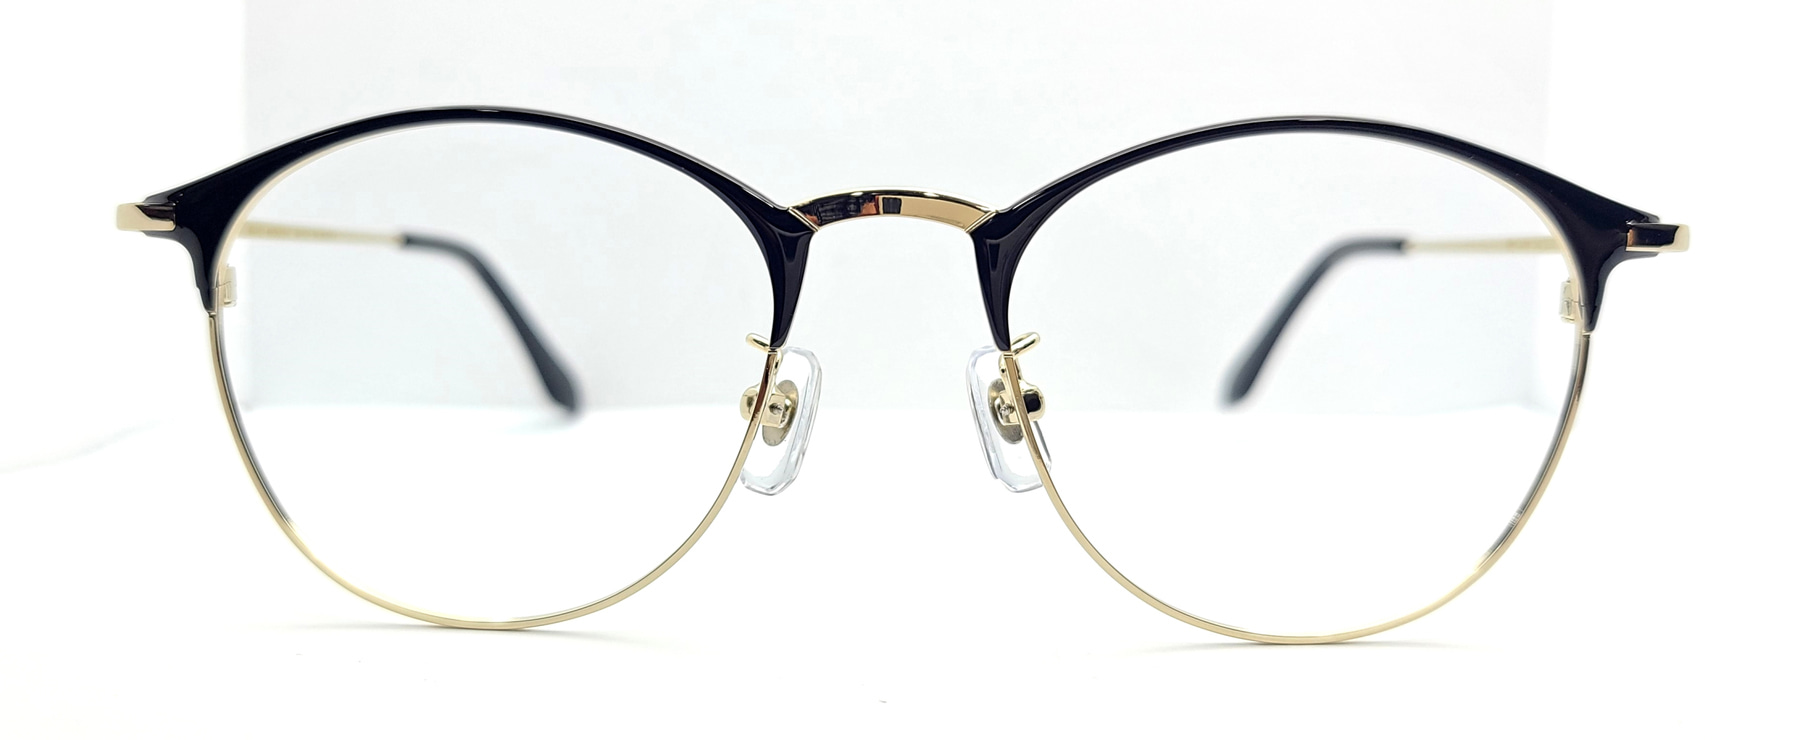 MINIHOUSE M-1384, Korean glasses, sunglasses, eyeglasses, glasses